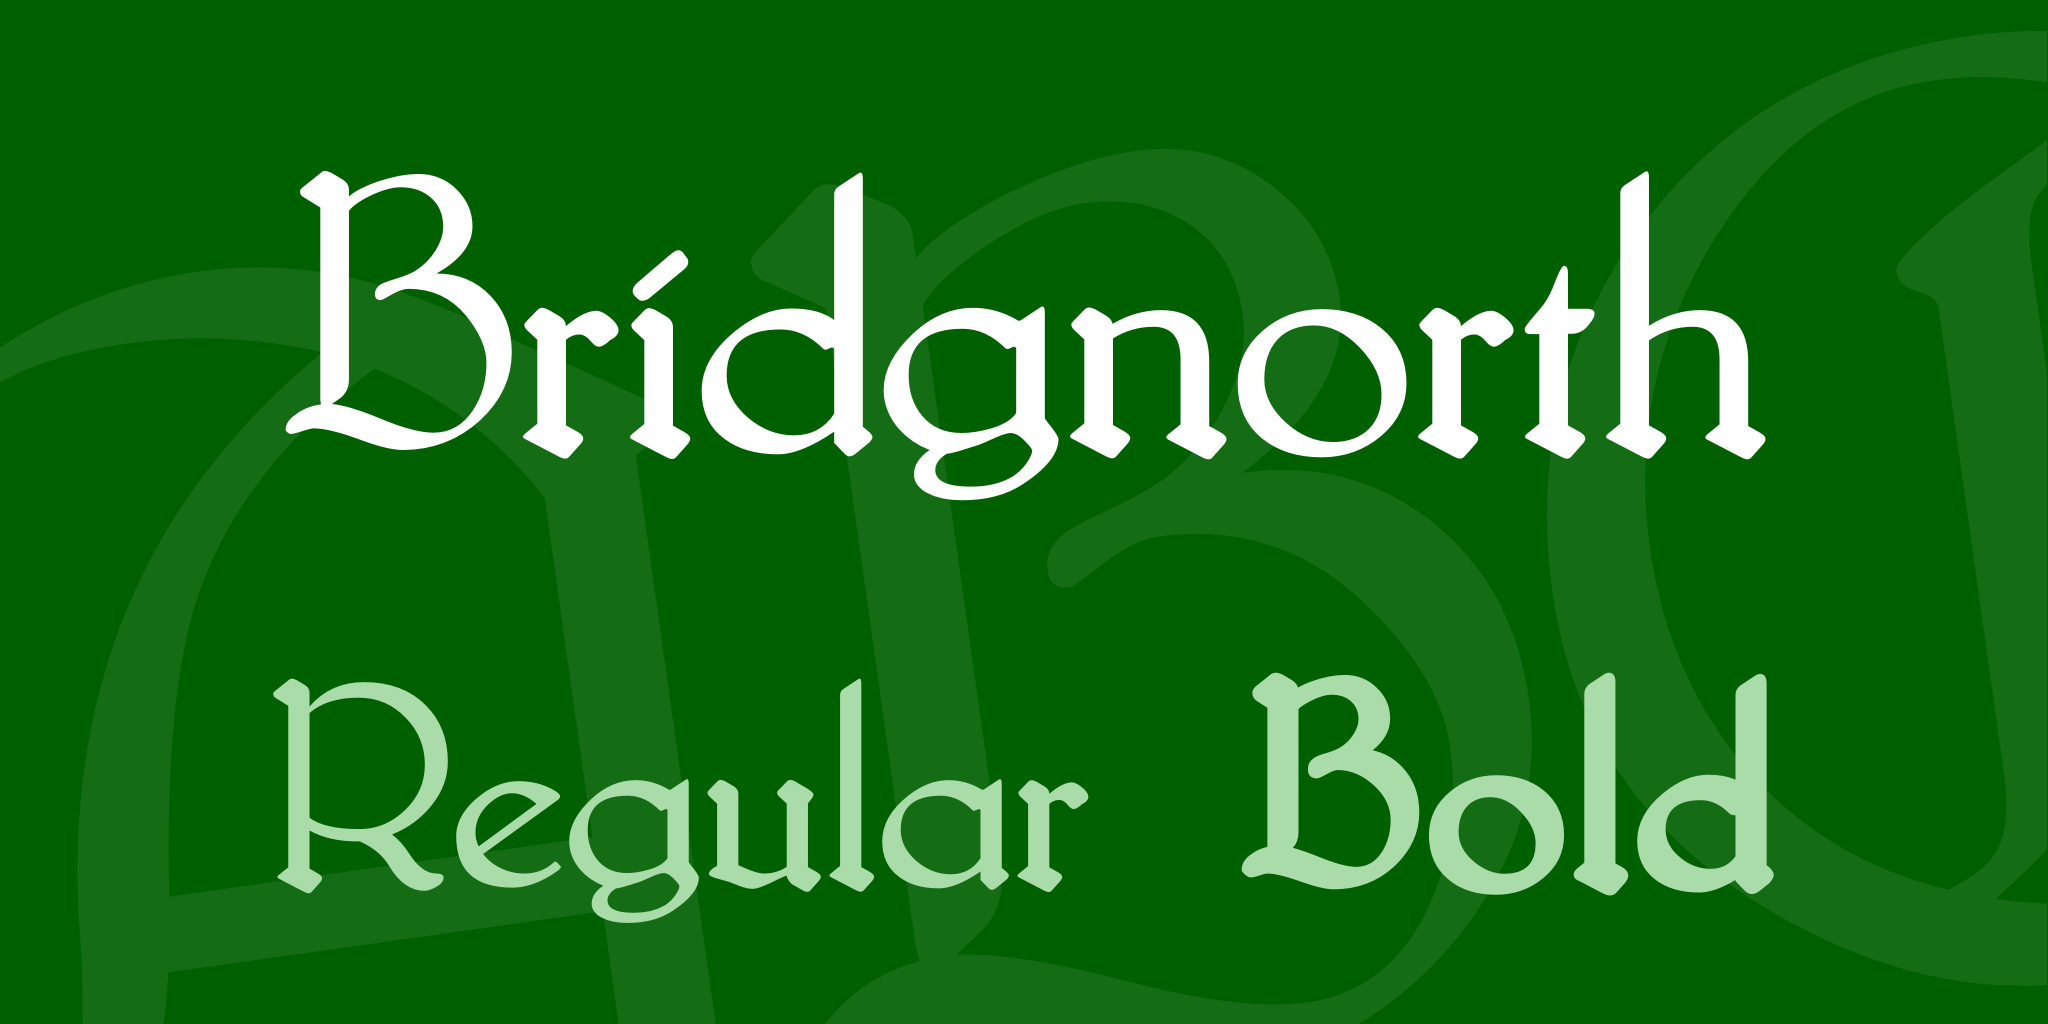 Bridgnorth